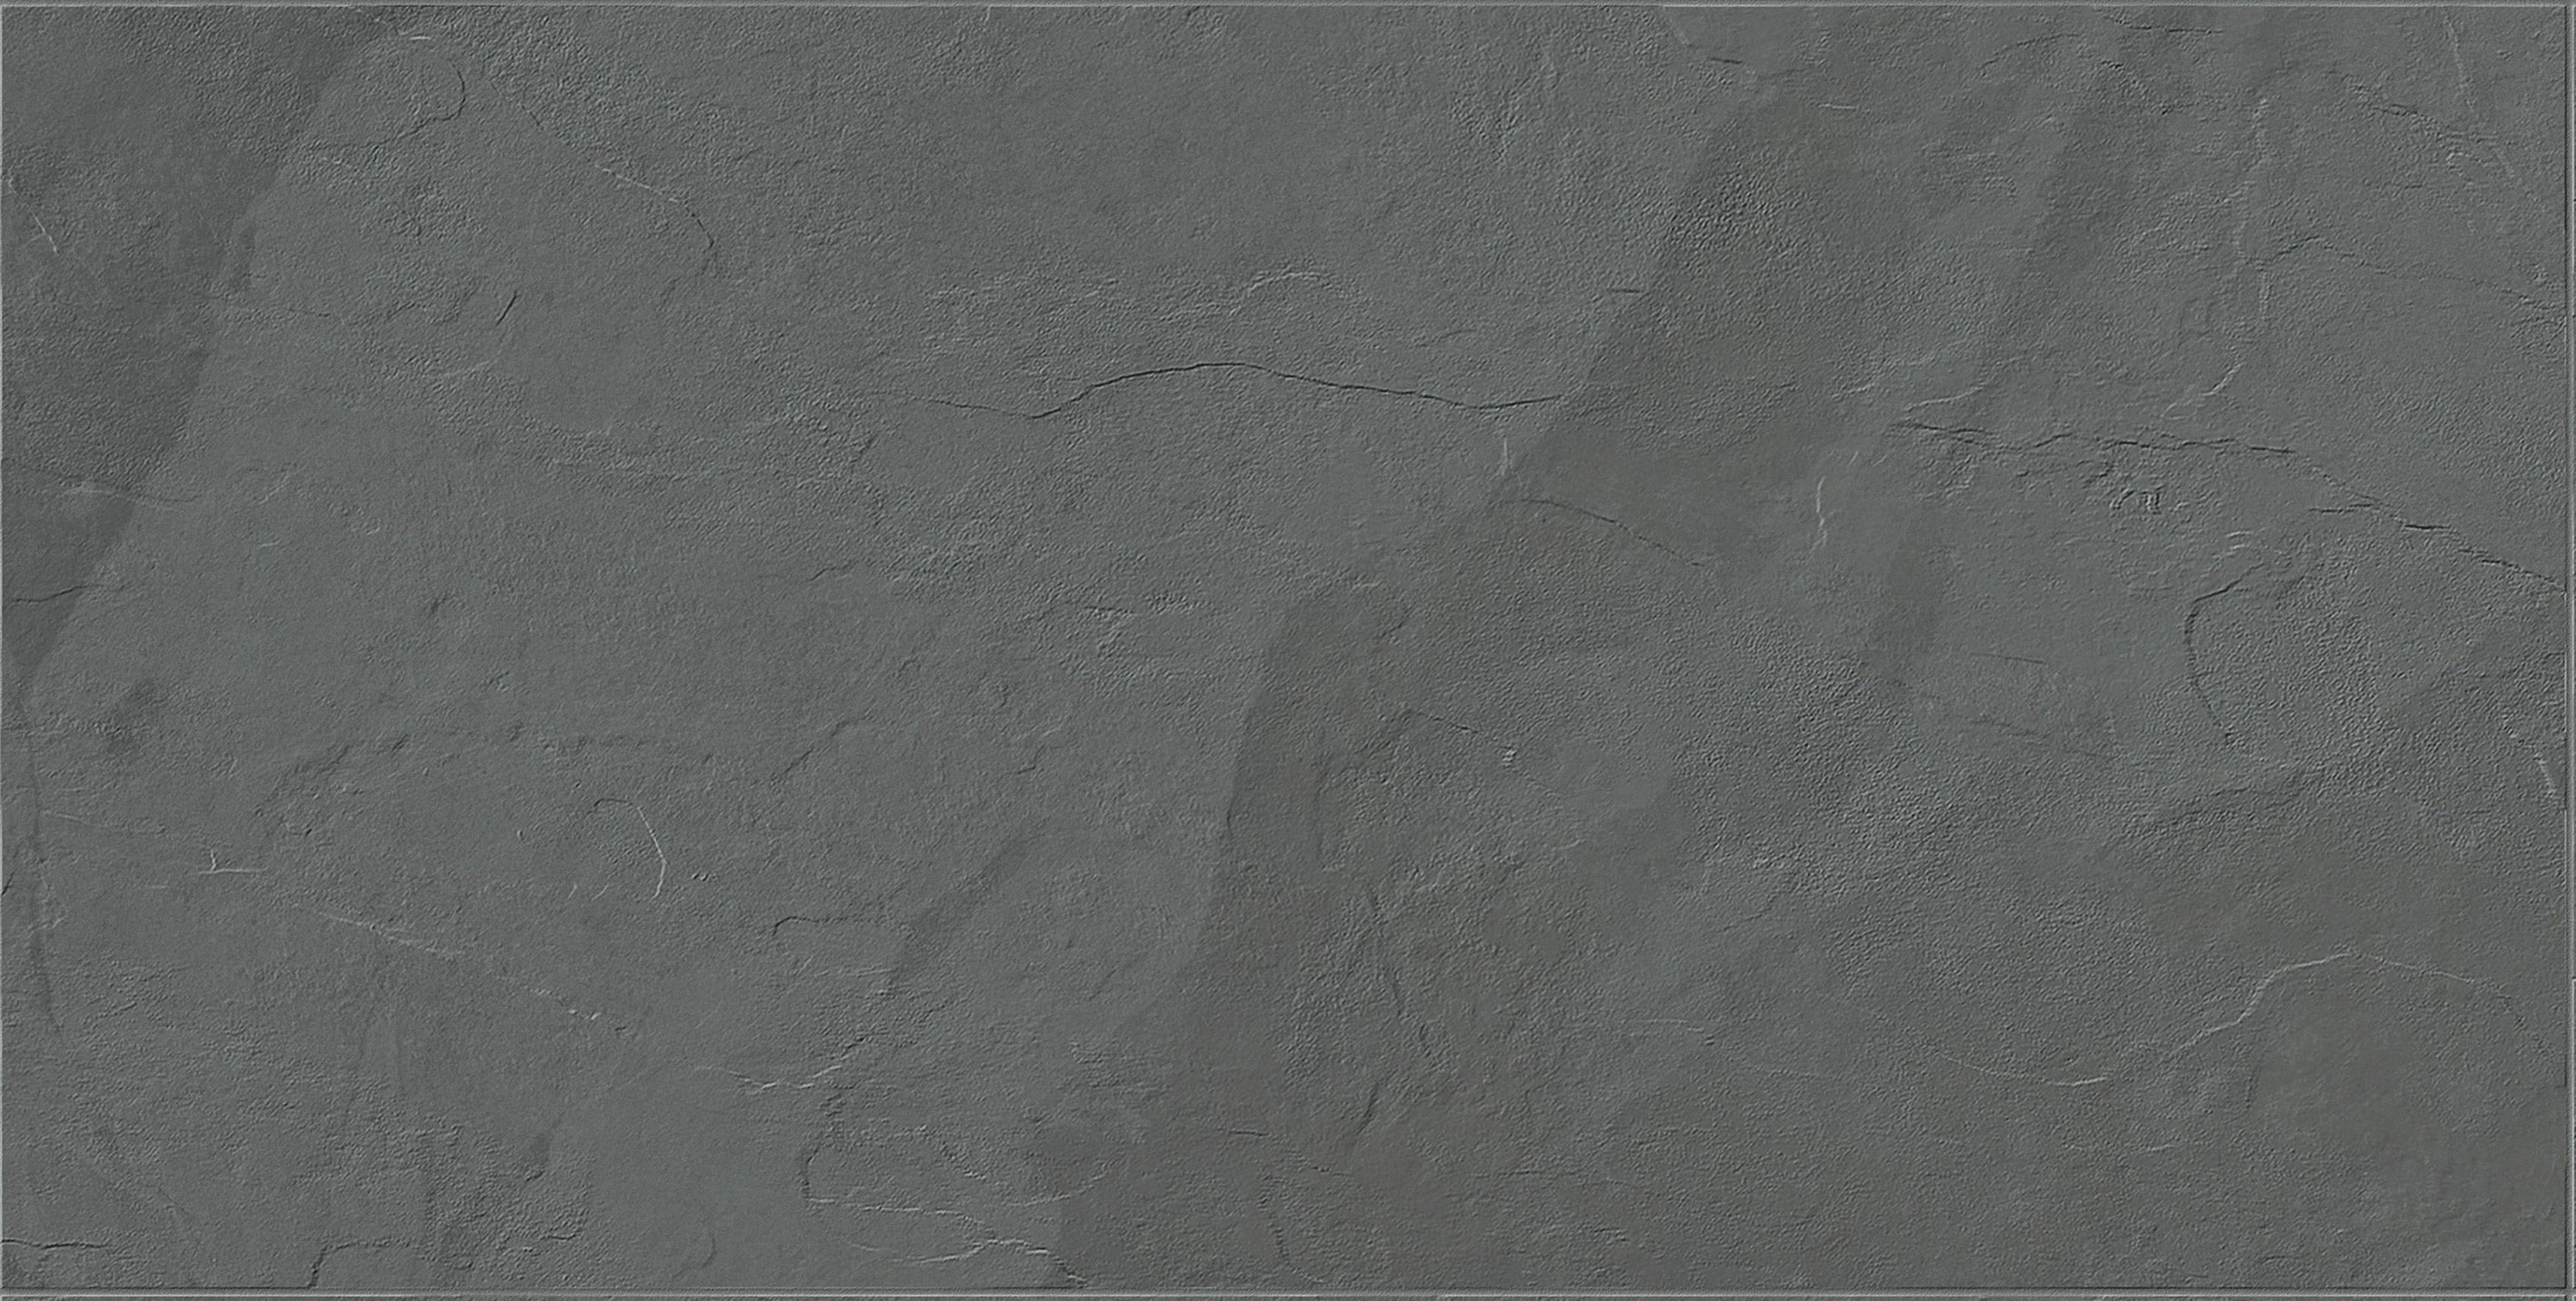 landmark frontier20 slate montauk grey paver tile 24x48x20mm matte rectified porcelain tile distributed by surface group international